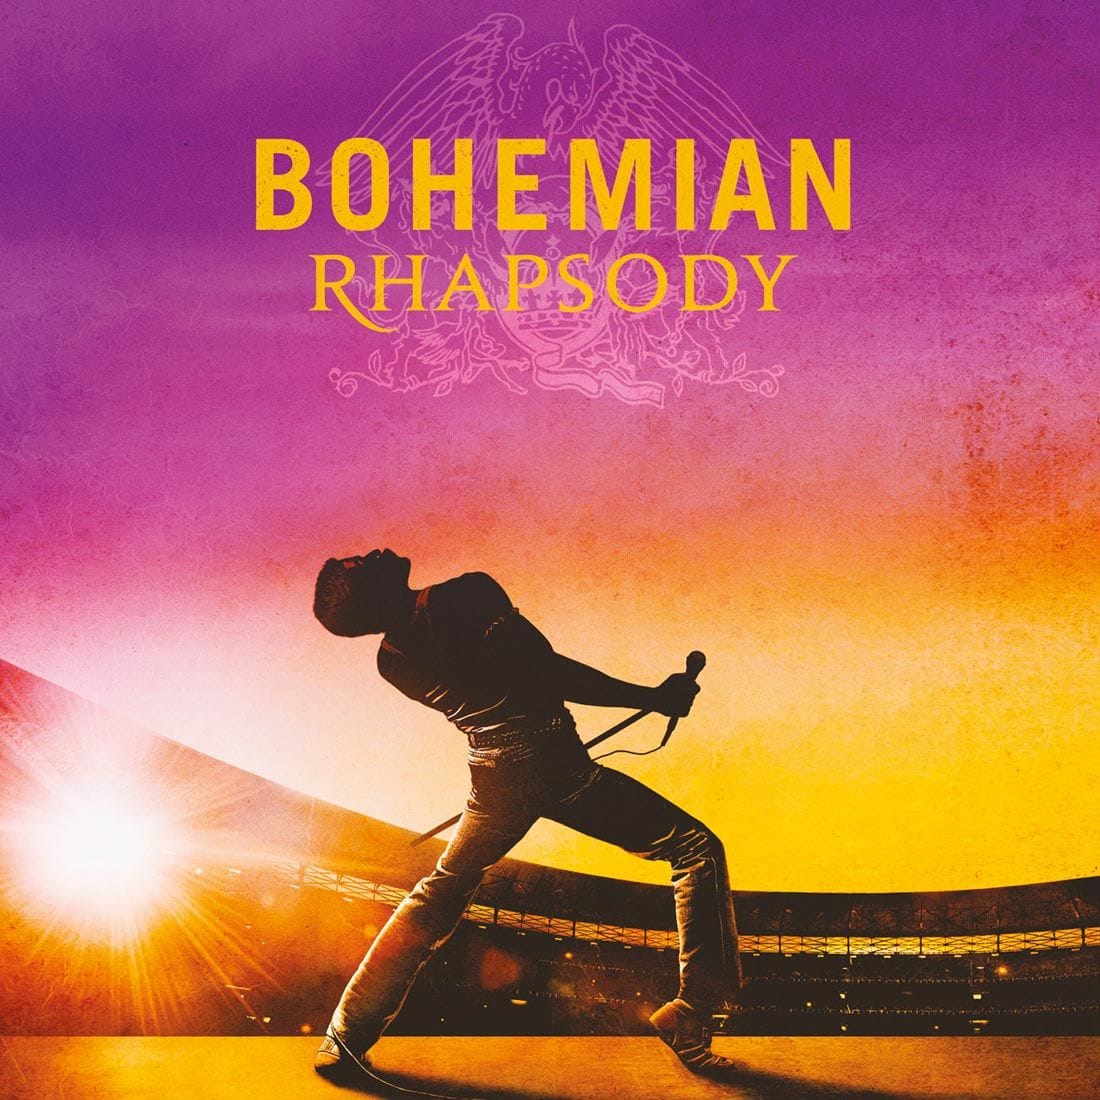 Bohemian Rhapsody bande originale du film cinéma